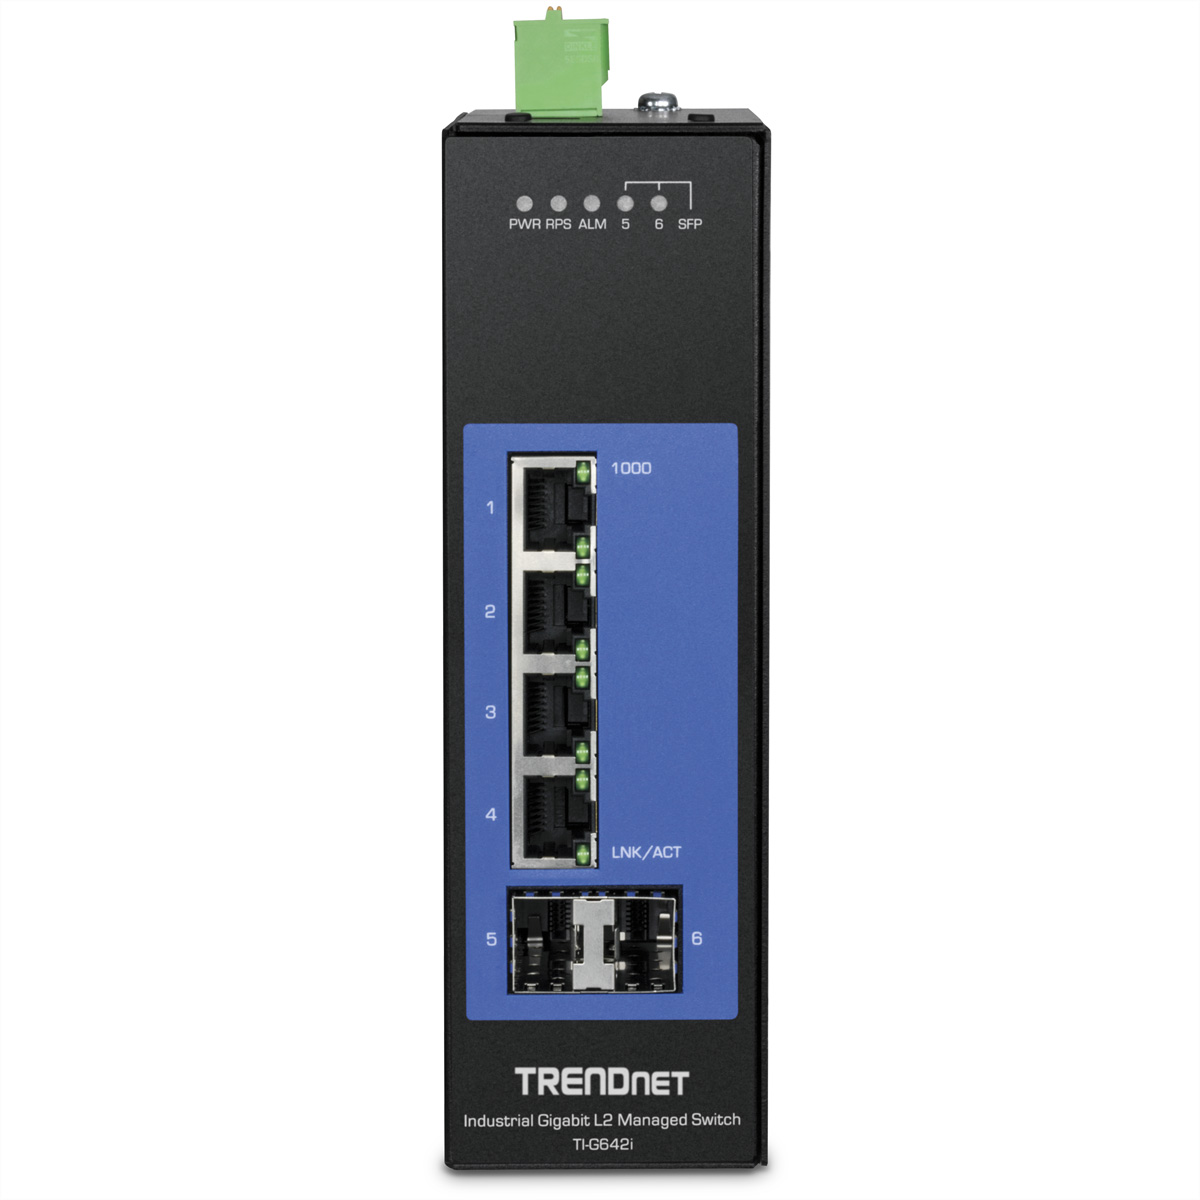 TRENDNET TI-G642i DIN-Rail Switch Industrial Ethernet Gigabit Switch L2 Gigabit 6-Port